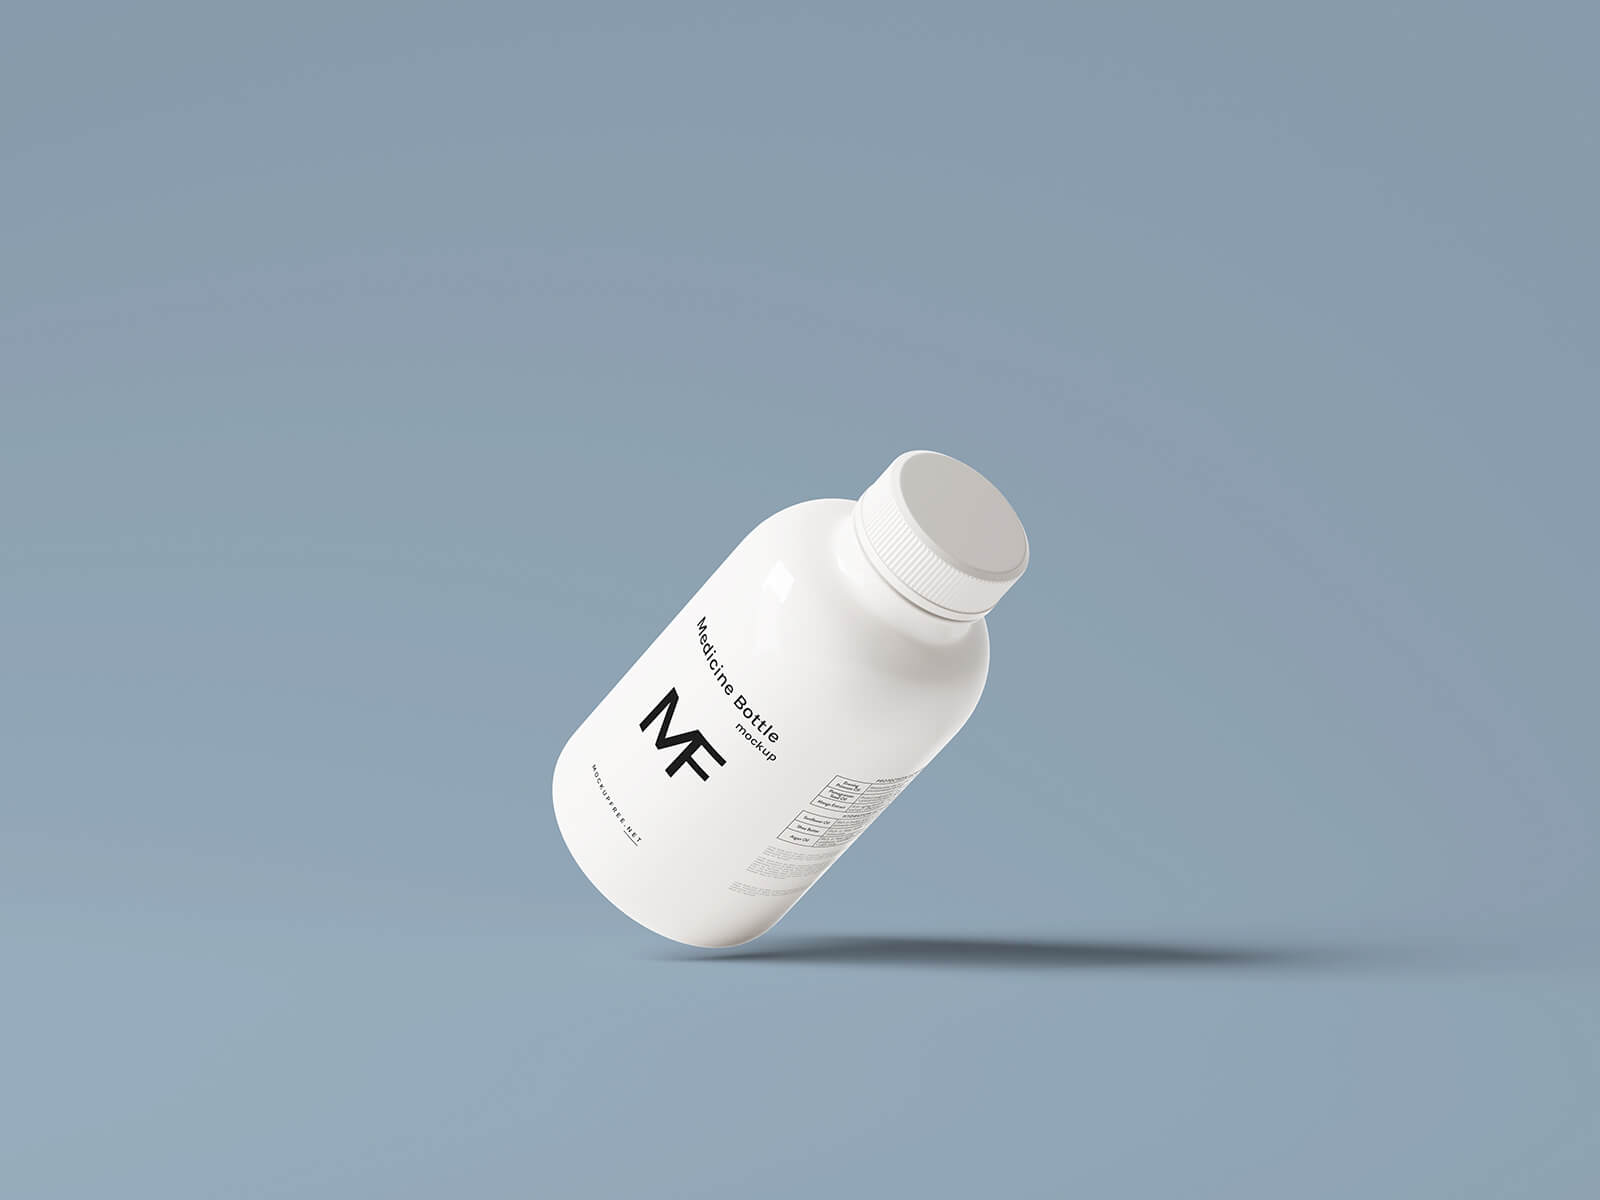 Free Plastic Supplements Pills Medicine Bottle Mockup PSD